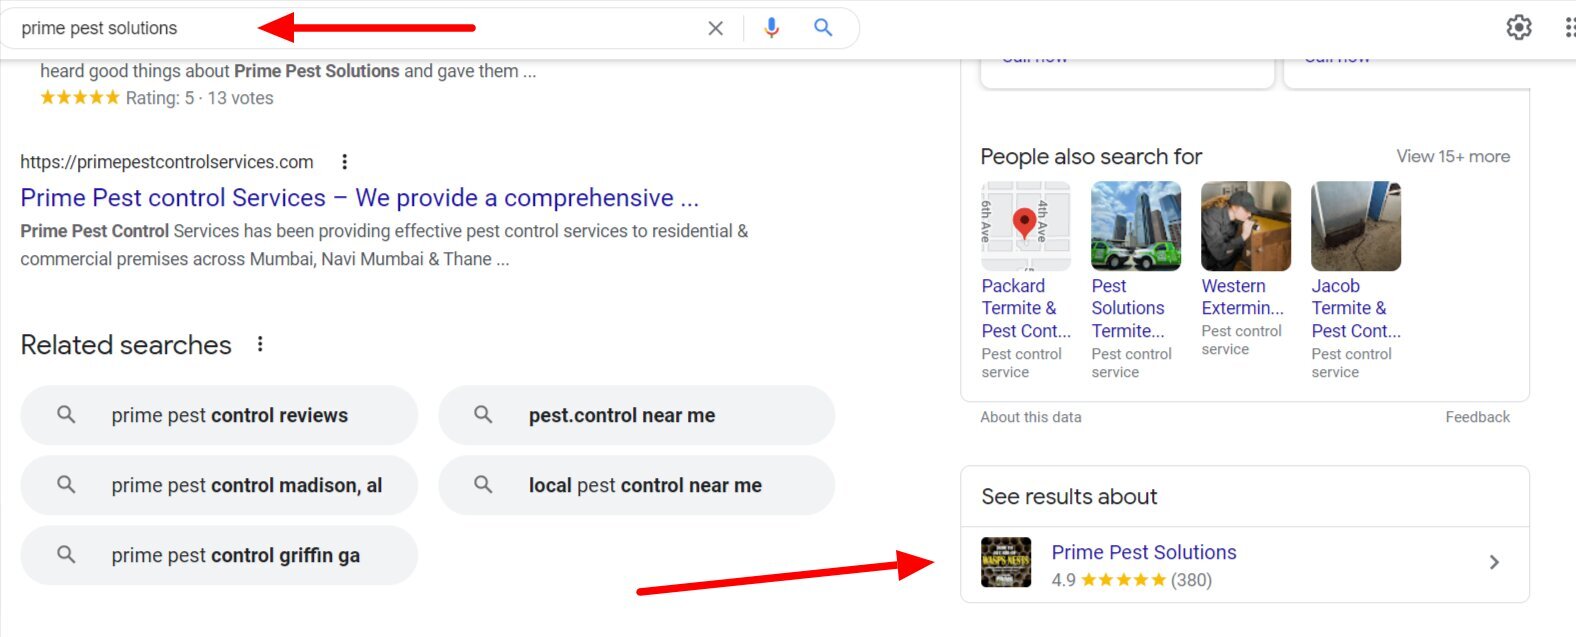 prime-pest-solutions-Google-Search.jpg